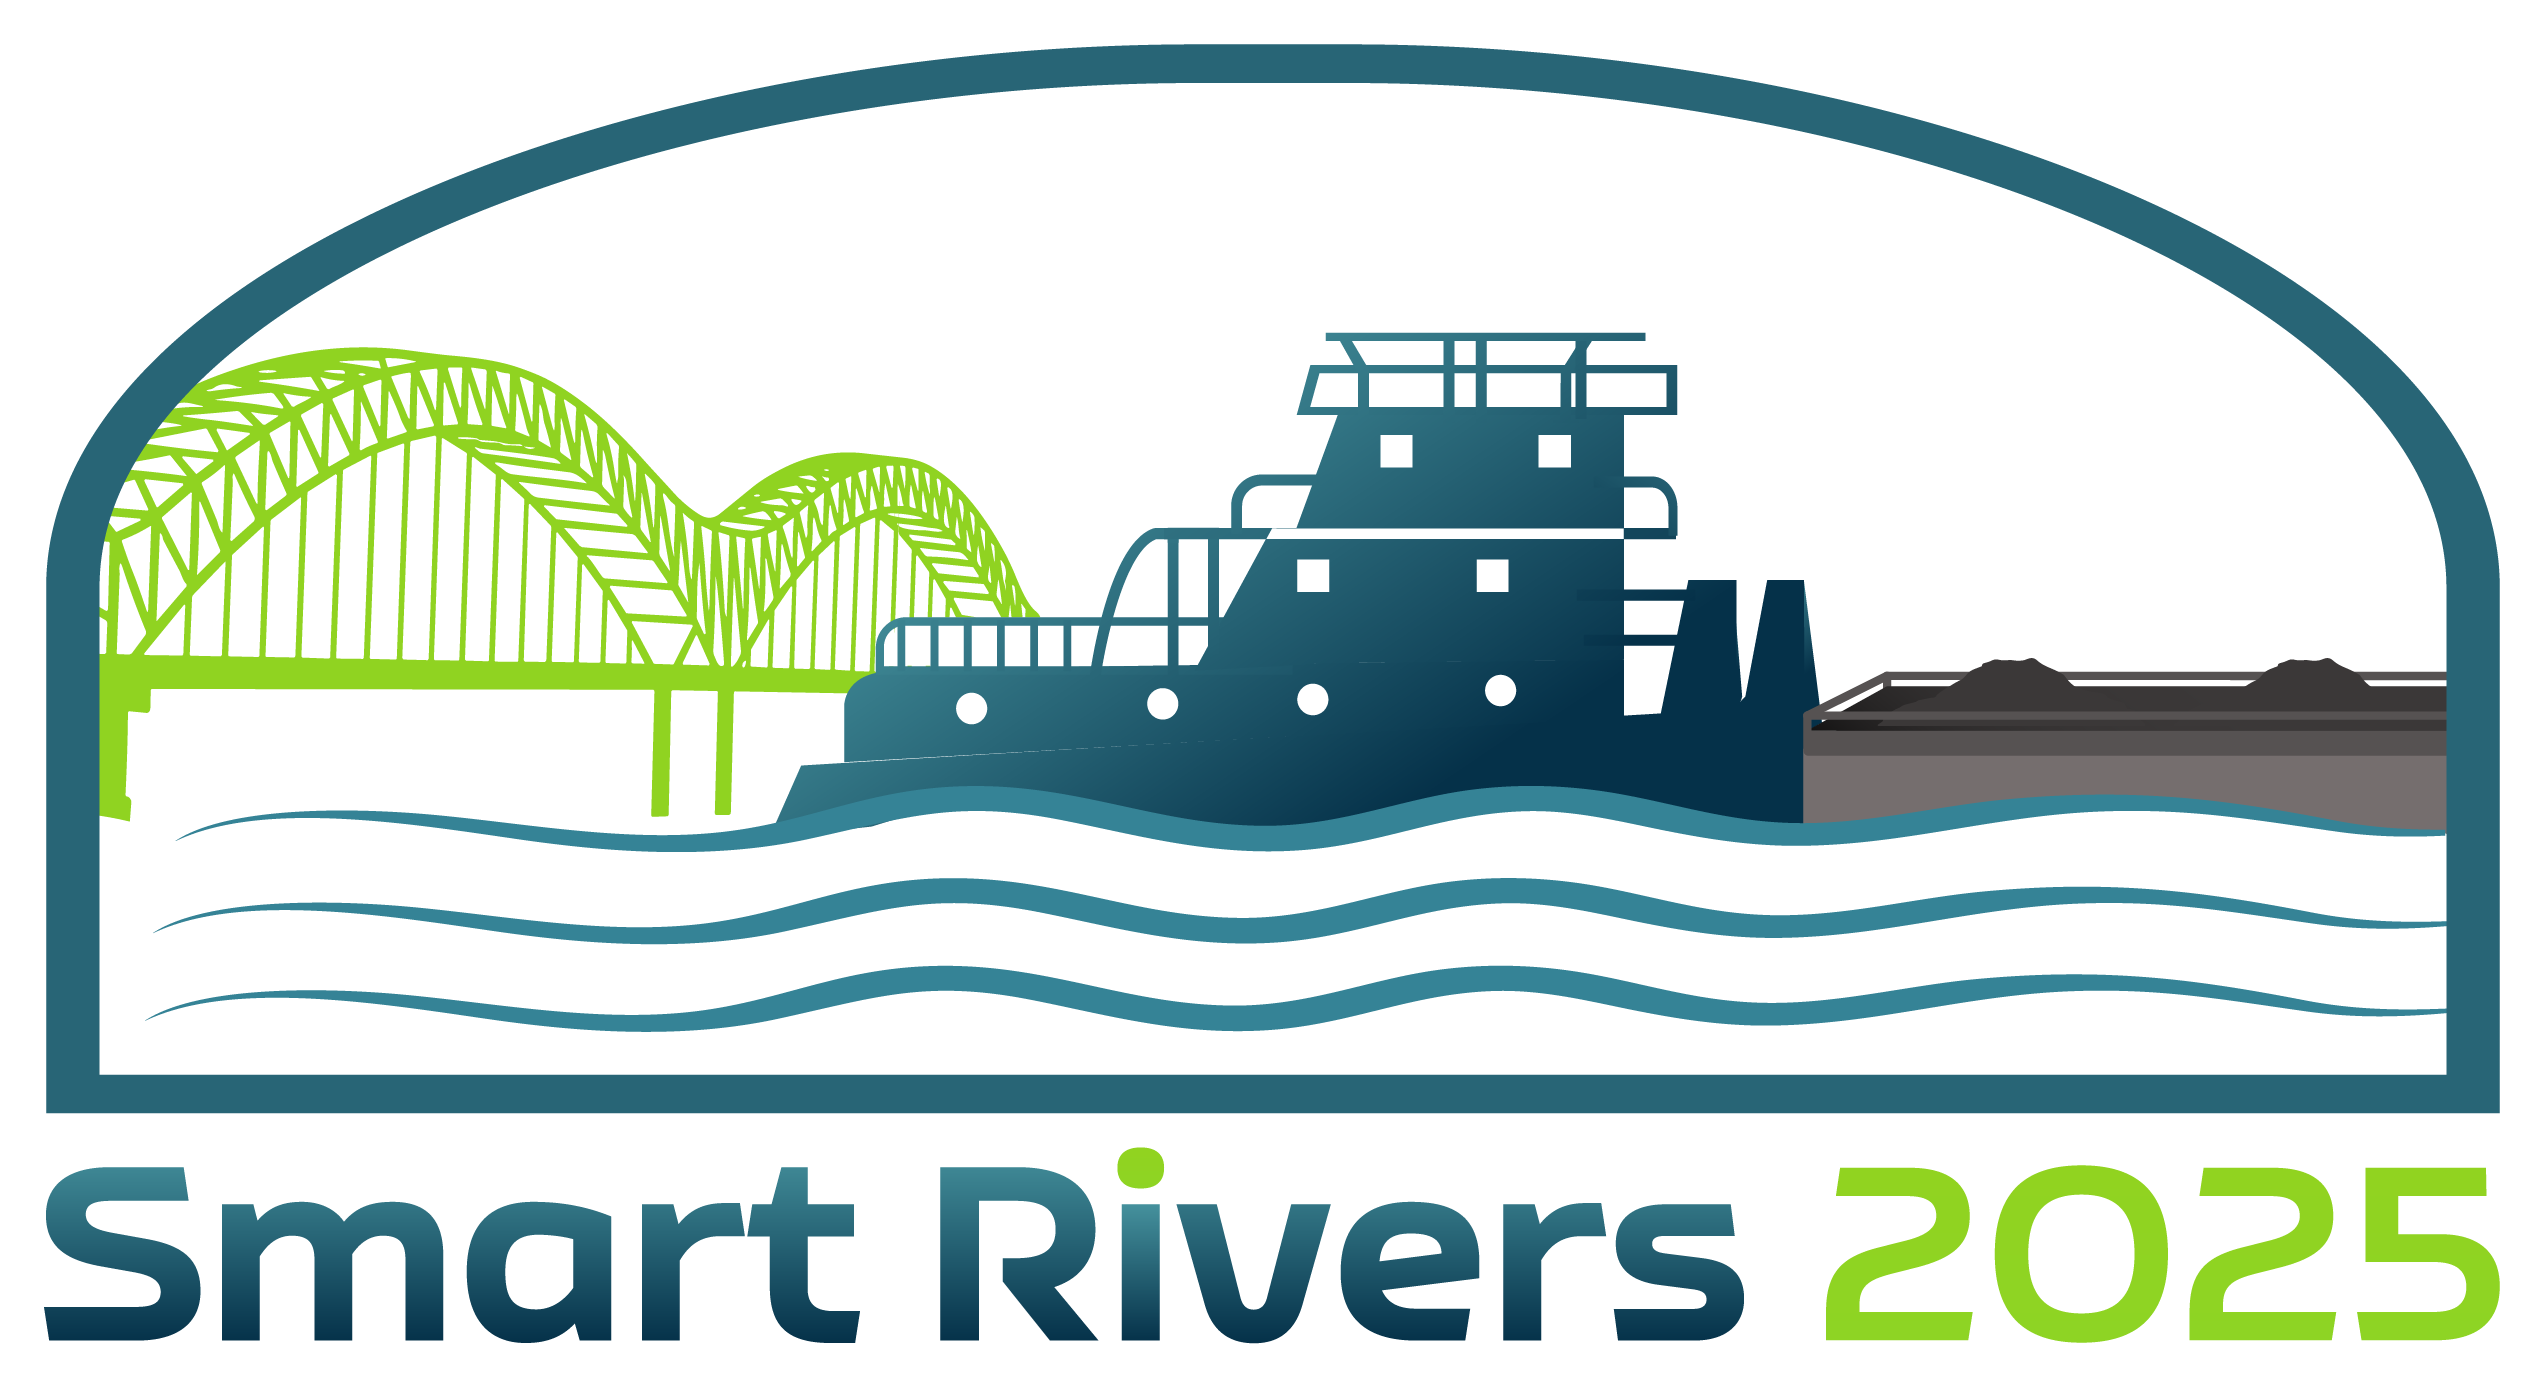 Smart Rivers 2025 logo